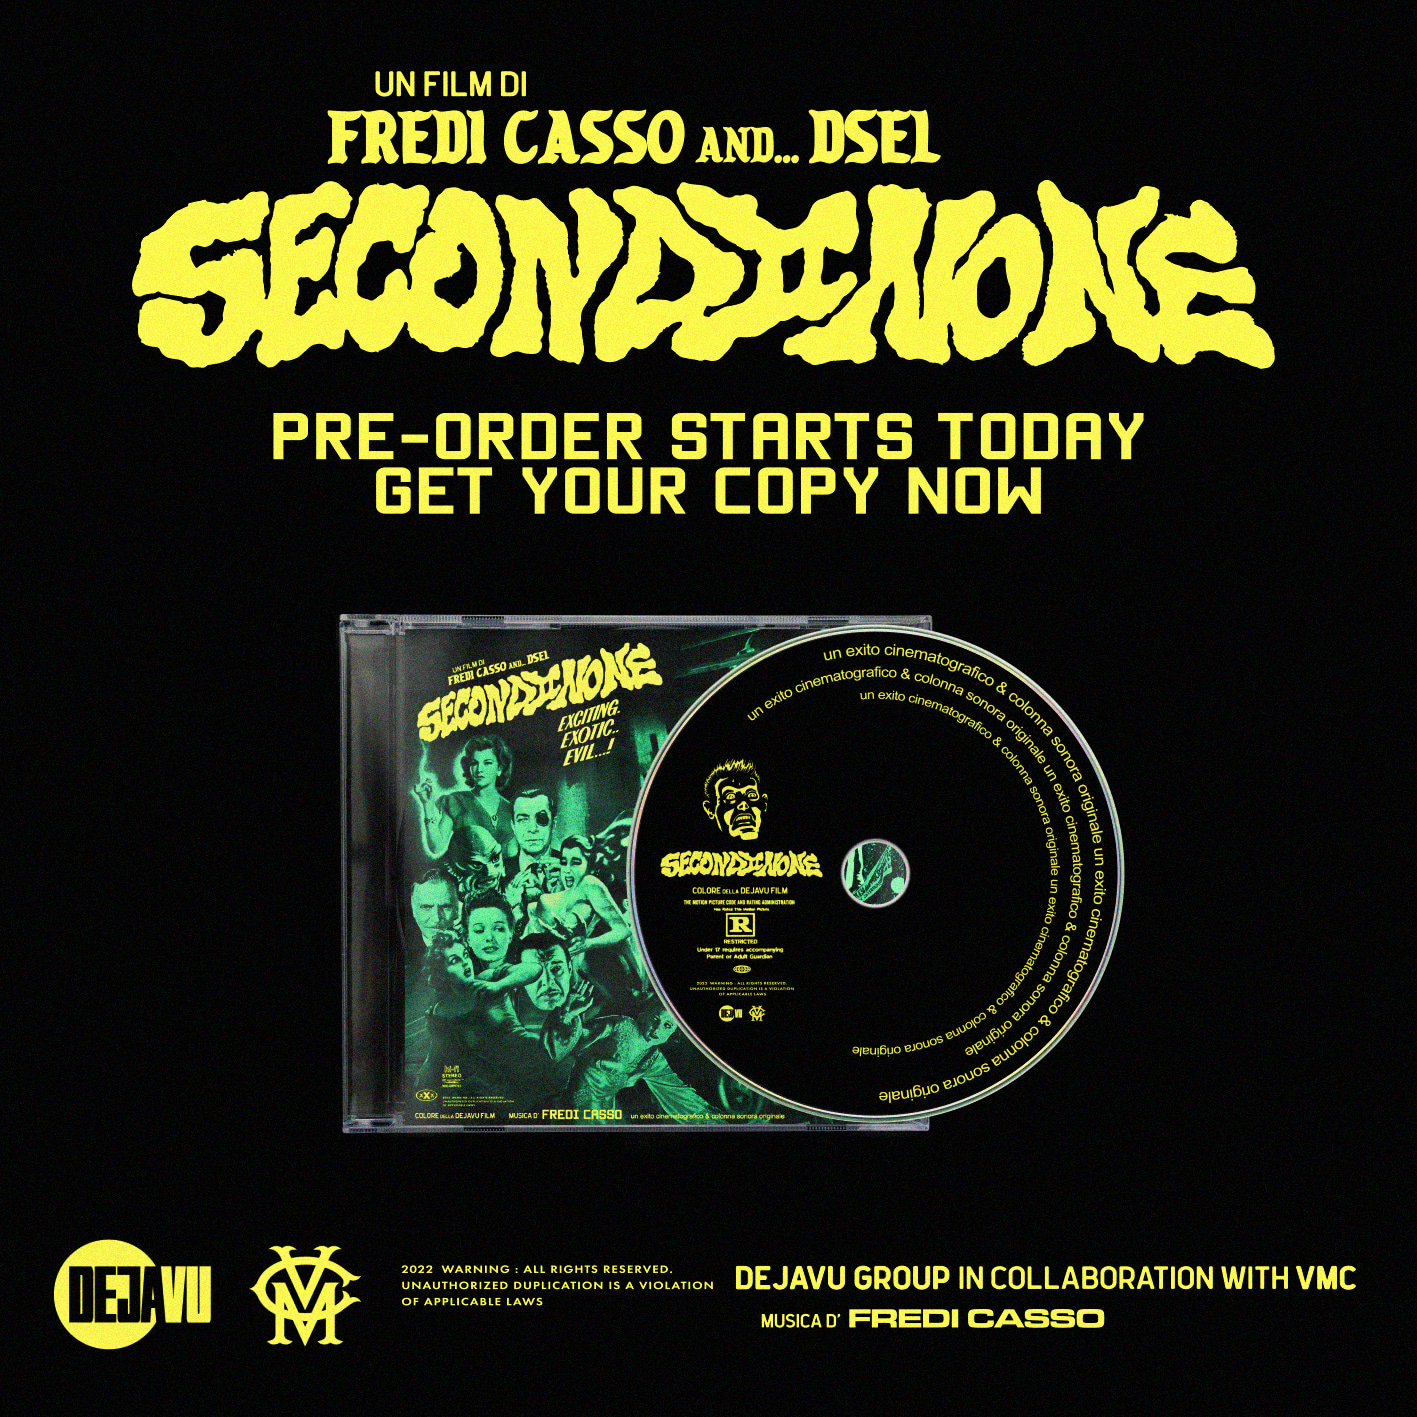 Fredi Casso X dsel [SECOND II NONE] CD